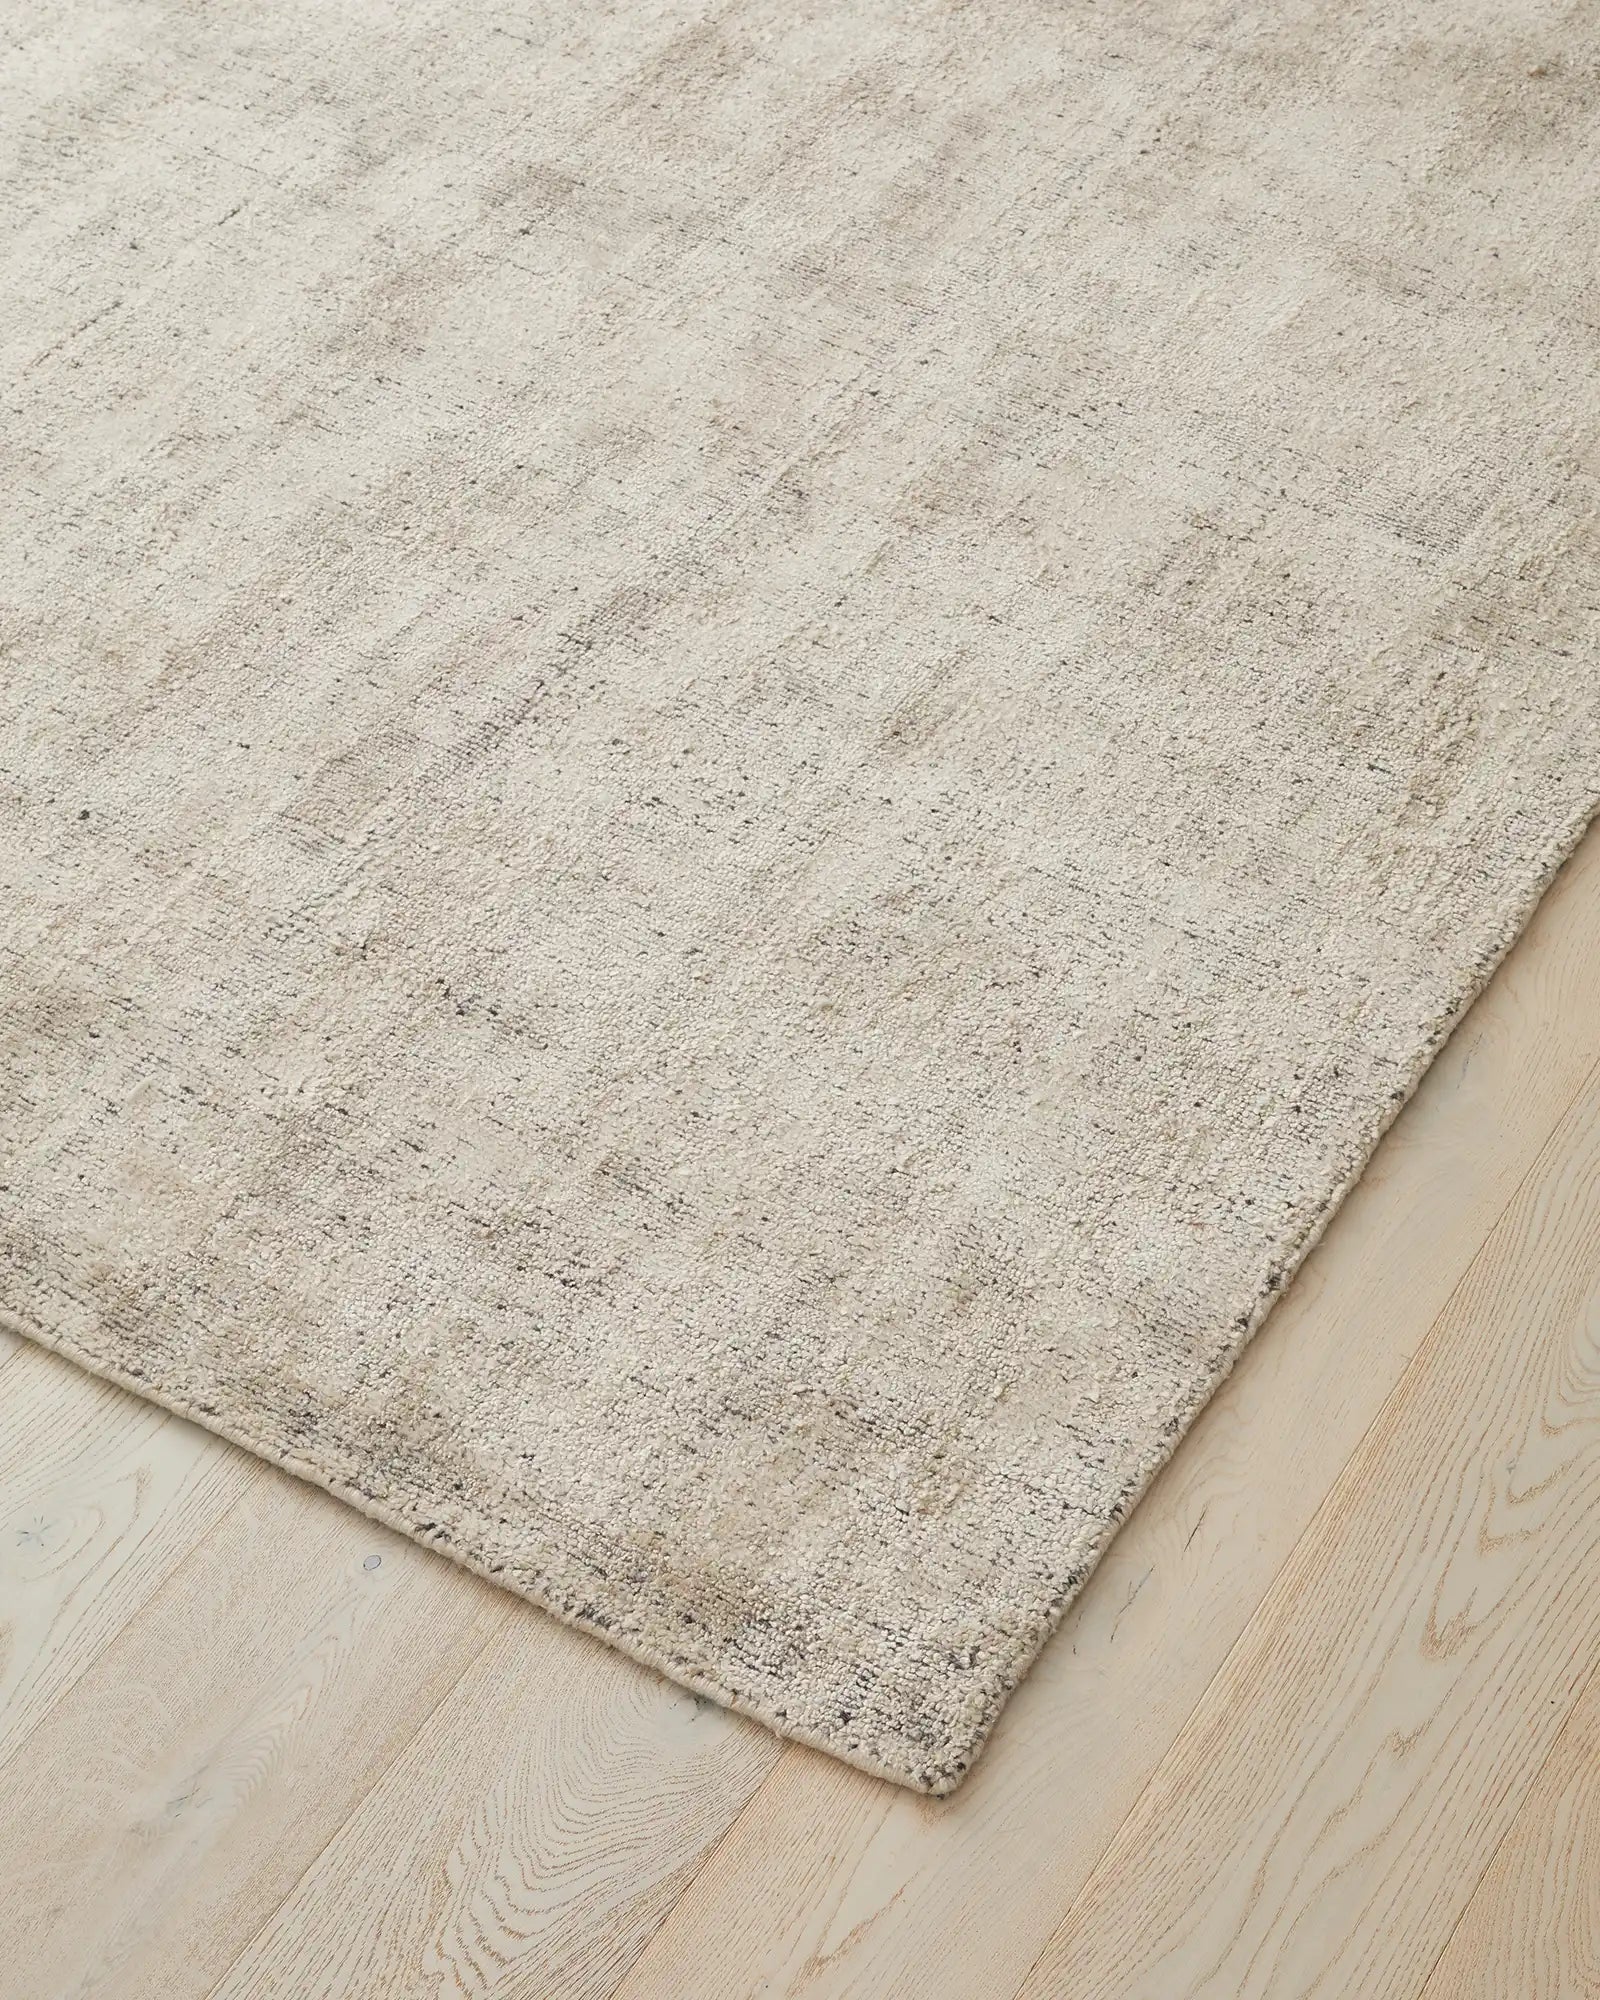 Weave Matisse Floor Rug - Buff RMD71BUFF